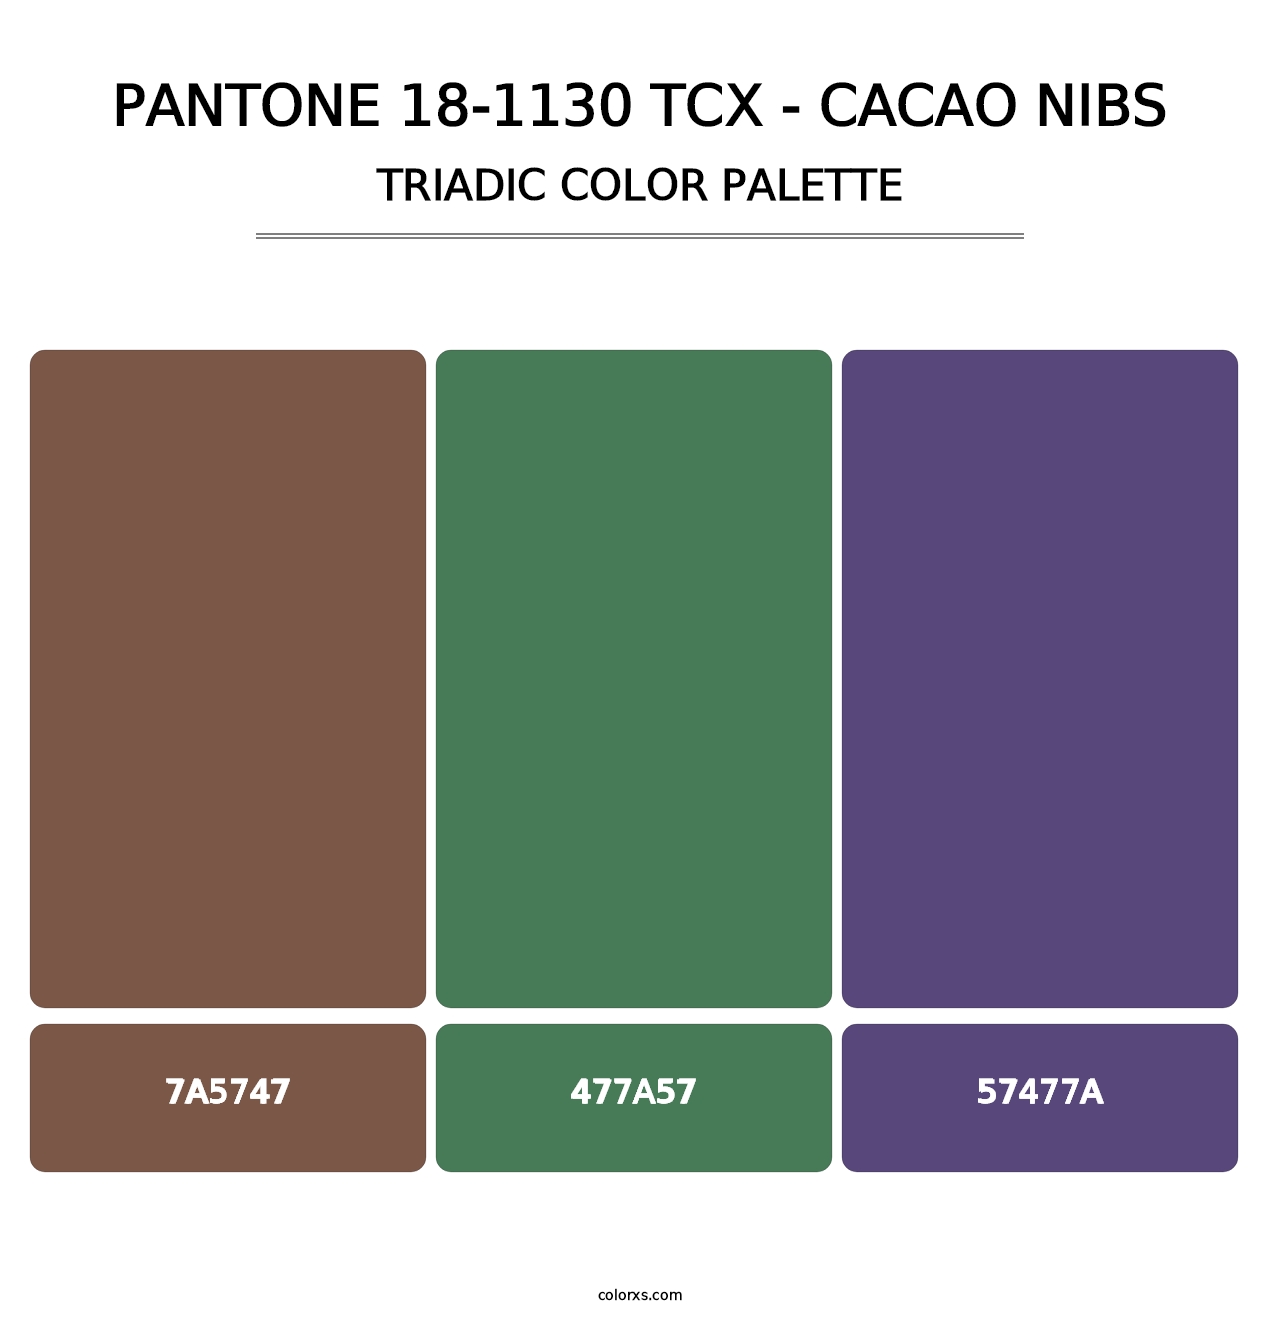 PANTONE 18-1130 TCX - Cacao Nibs - Triadic Color Palette